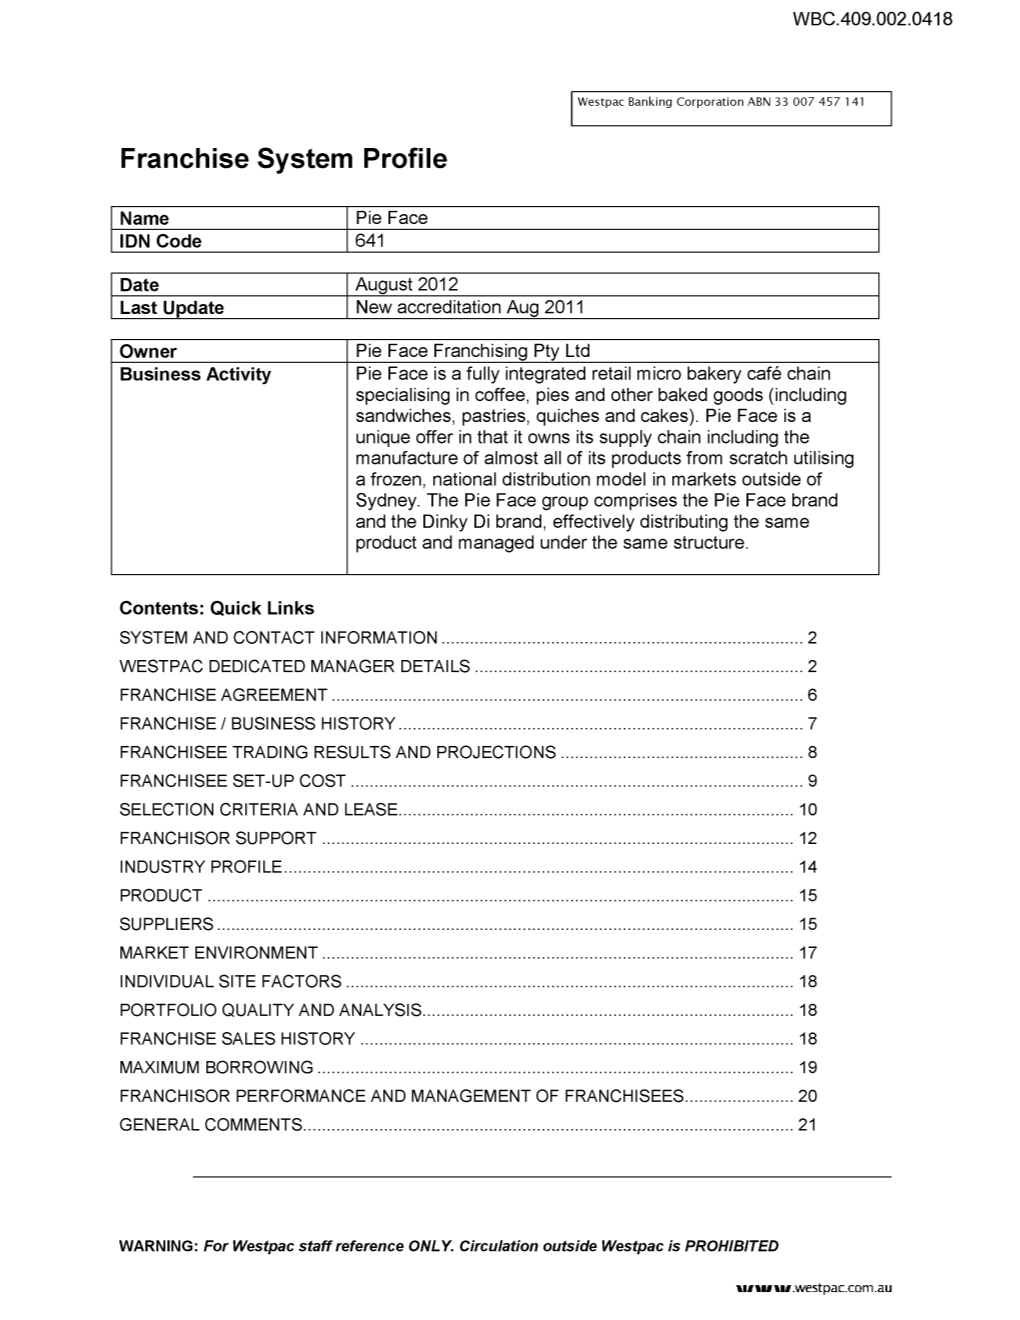 3.23Franchise System Profile [Pdf 3364Kb]